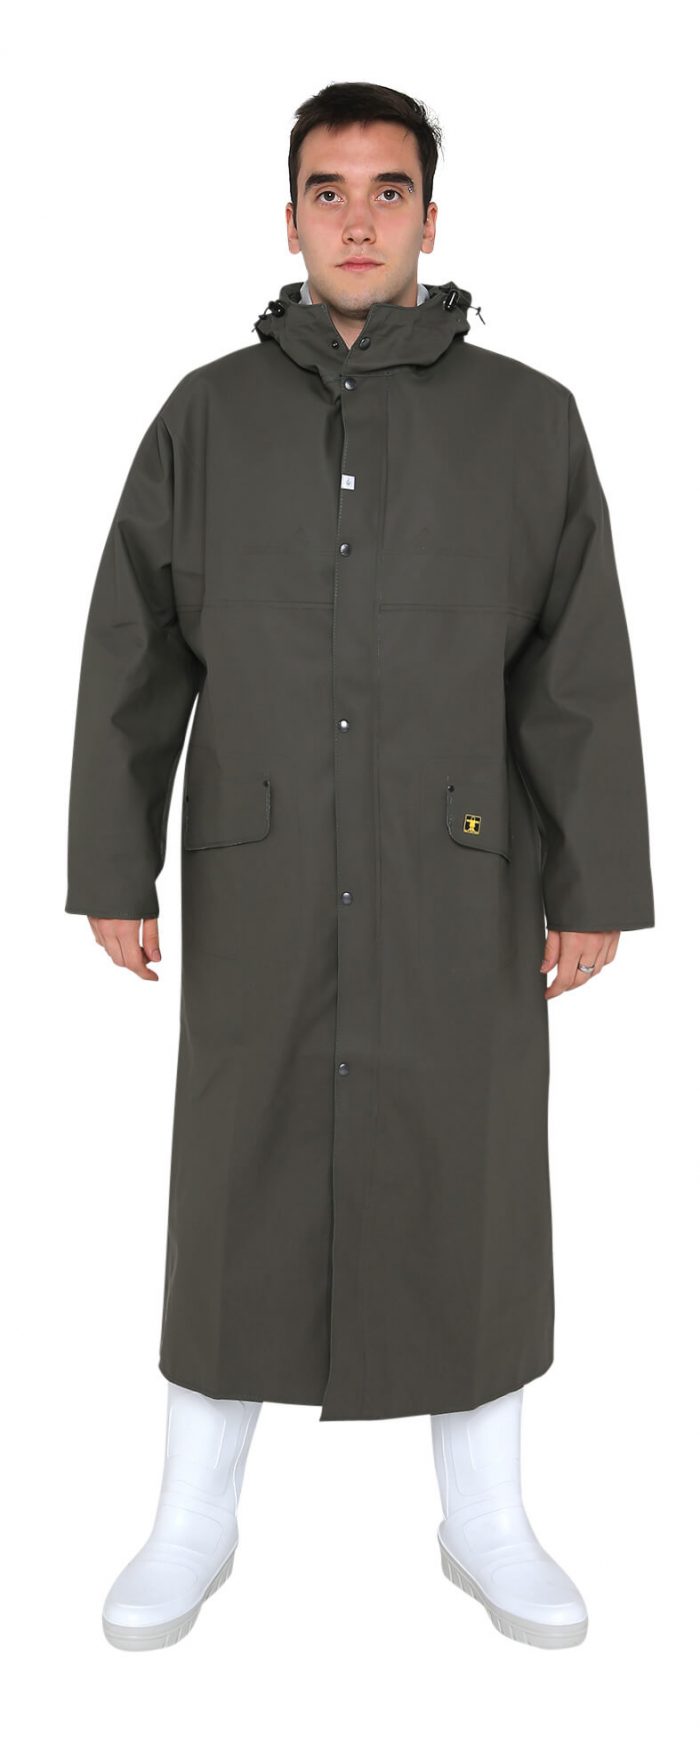 Isofarmer Long rain coat - Front